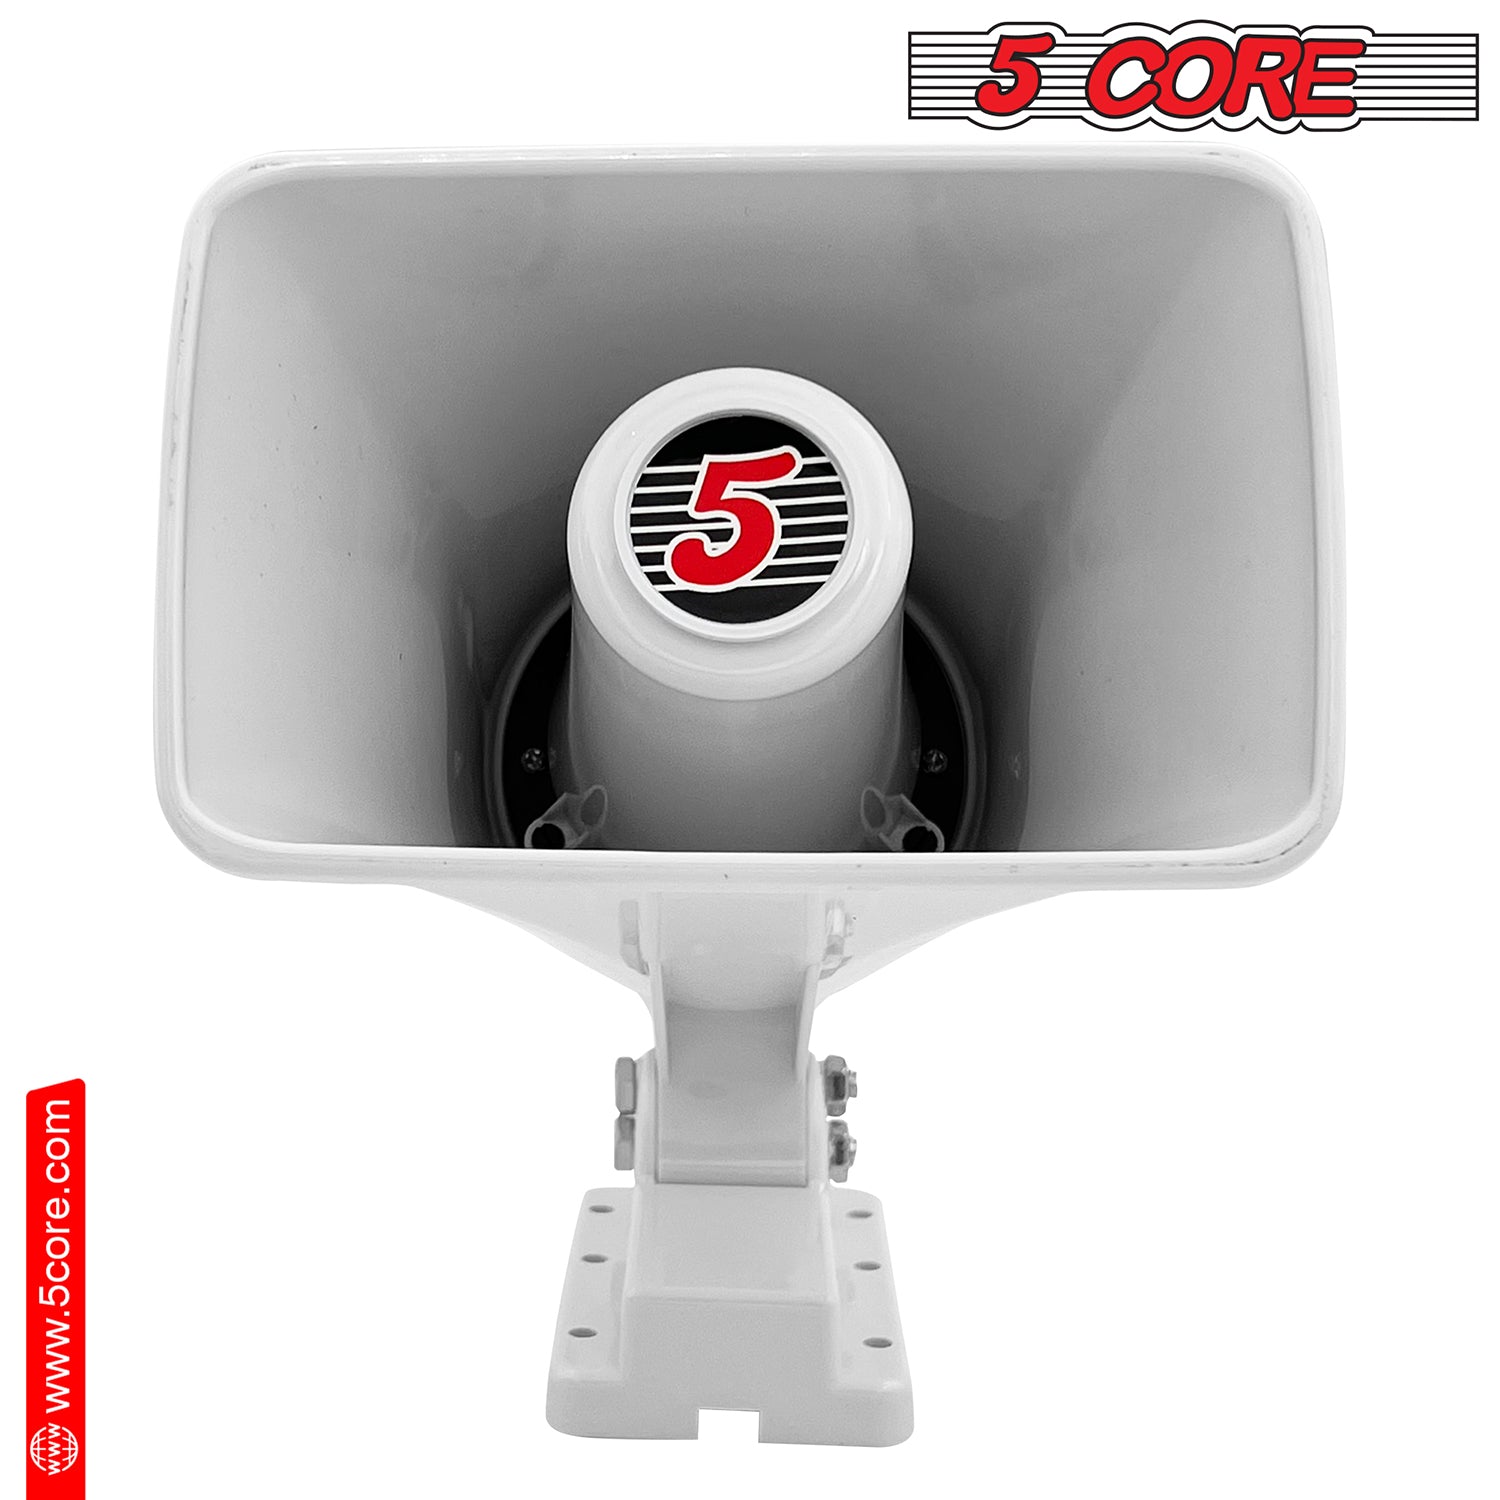 5Core Indoor Outdoor PA Horn Speaker 6 x 4 Inch Loud PA System 8 Ohm 50W Loud Siren Audio 1/2/4/8 Pc